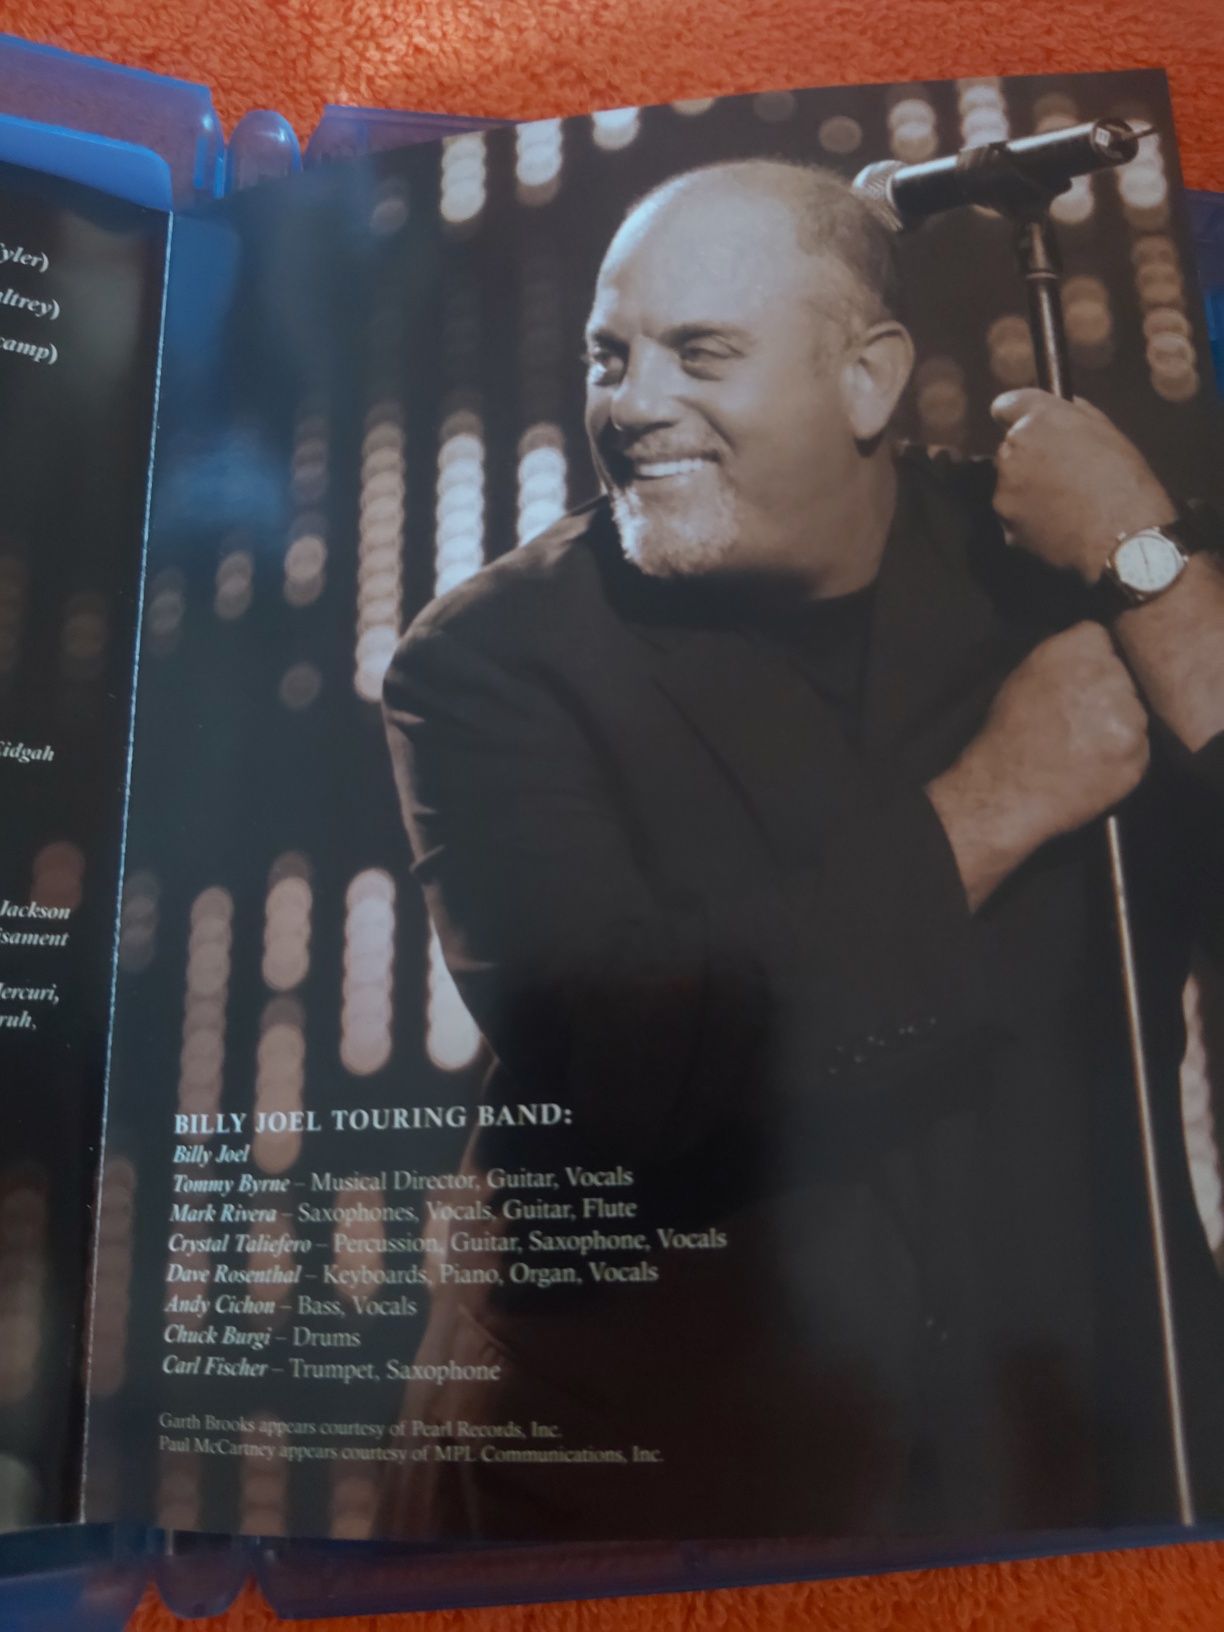 Bluray - Billy Joel - Live  At Shea Stadium